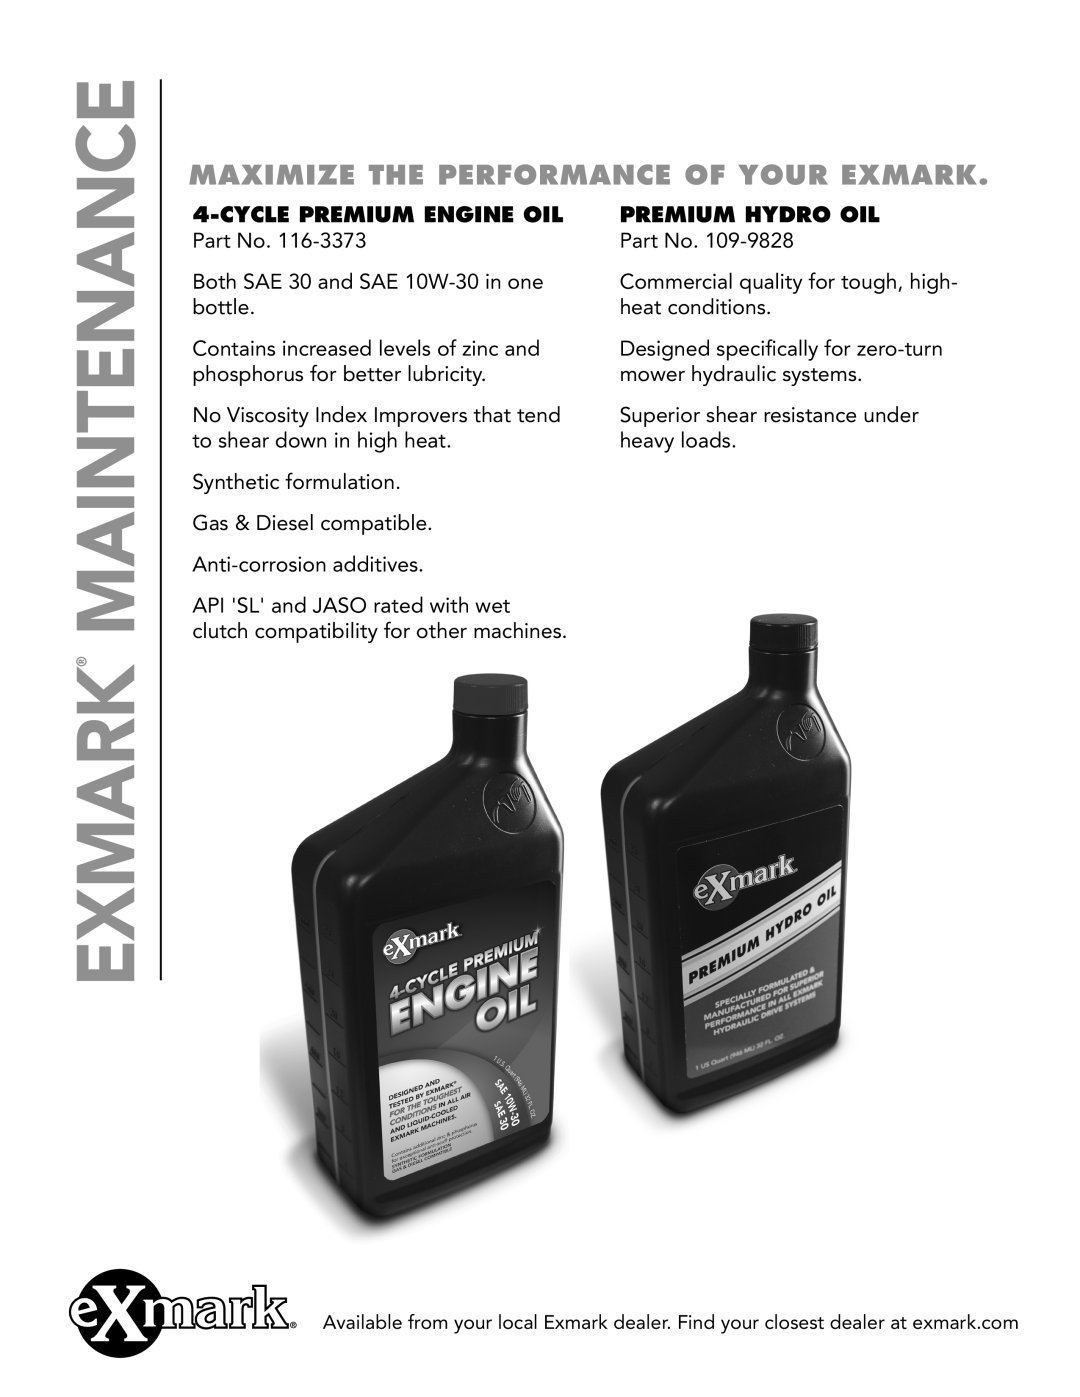 Exmark MG16KA362 CyclePremium Engine Oil, Premium Hydro Oil, Exmark Maintenance, Maximize the performance of your exmark 